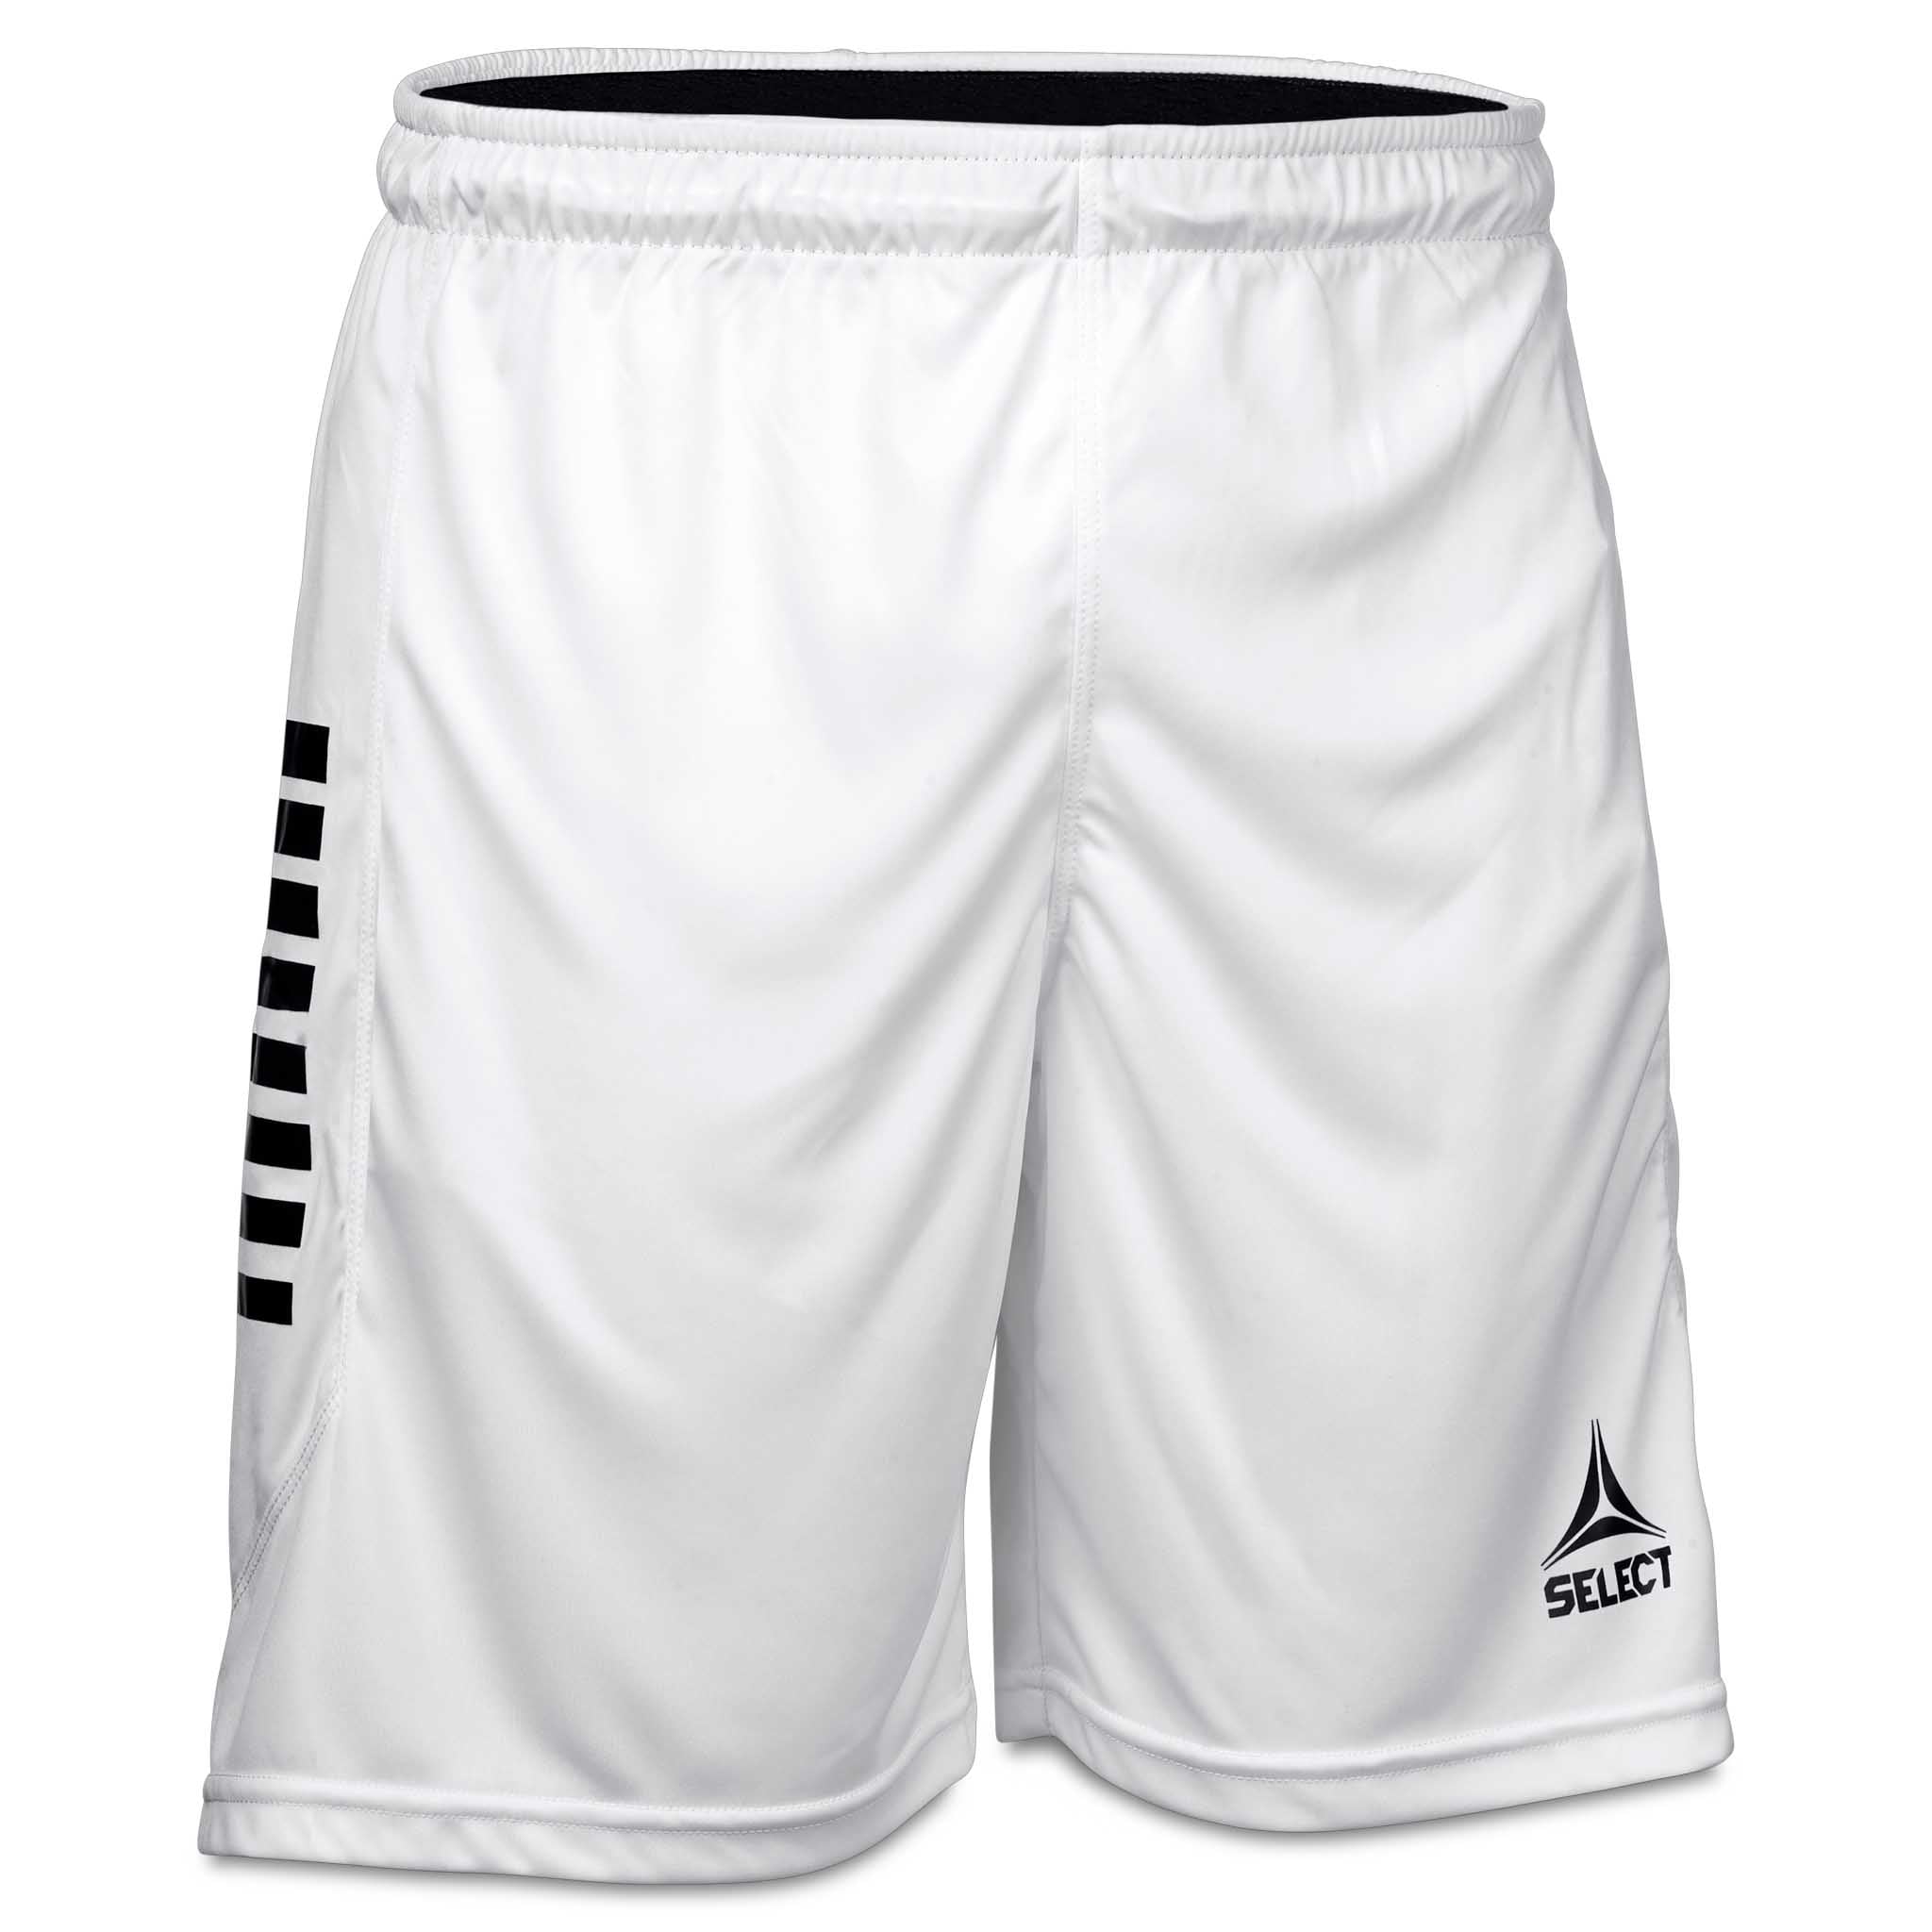 Monaco shorts #färg_vit/svart